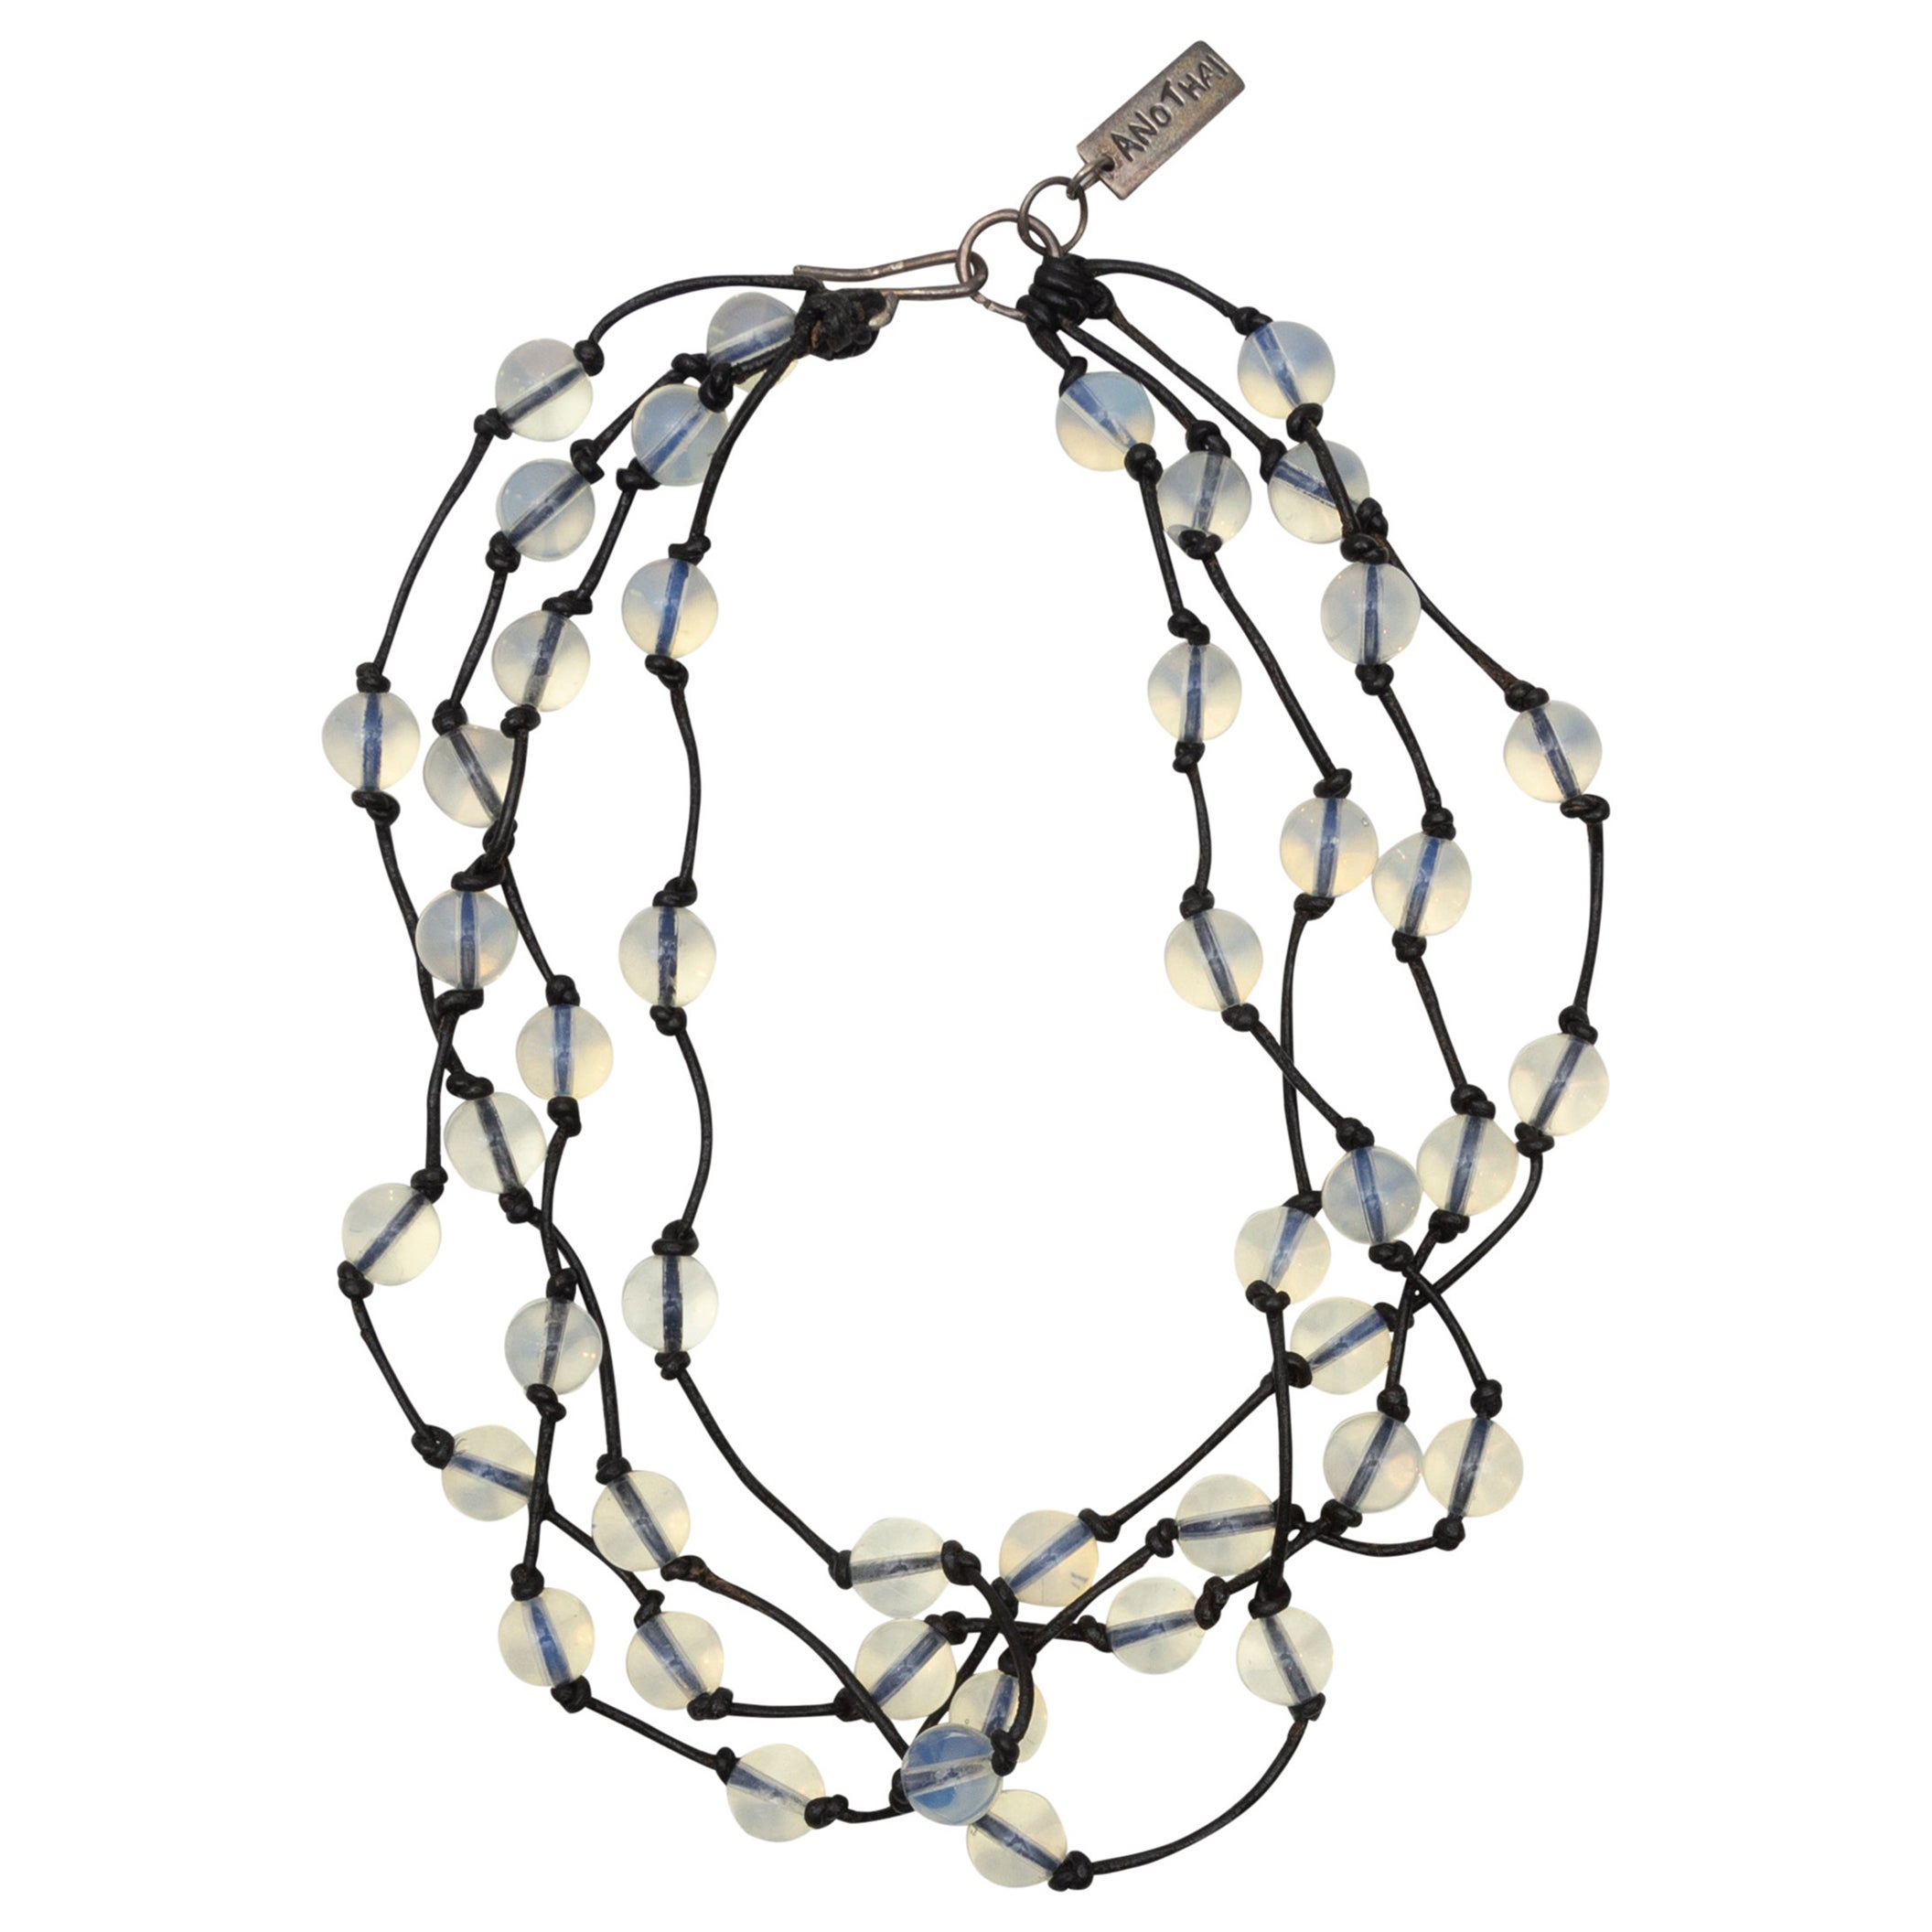 Anothai Hansen Light Blue & Black Multistrand Quartz Necklace